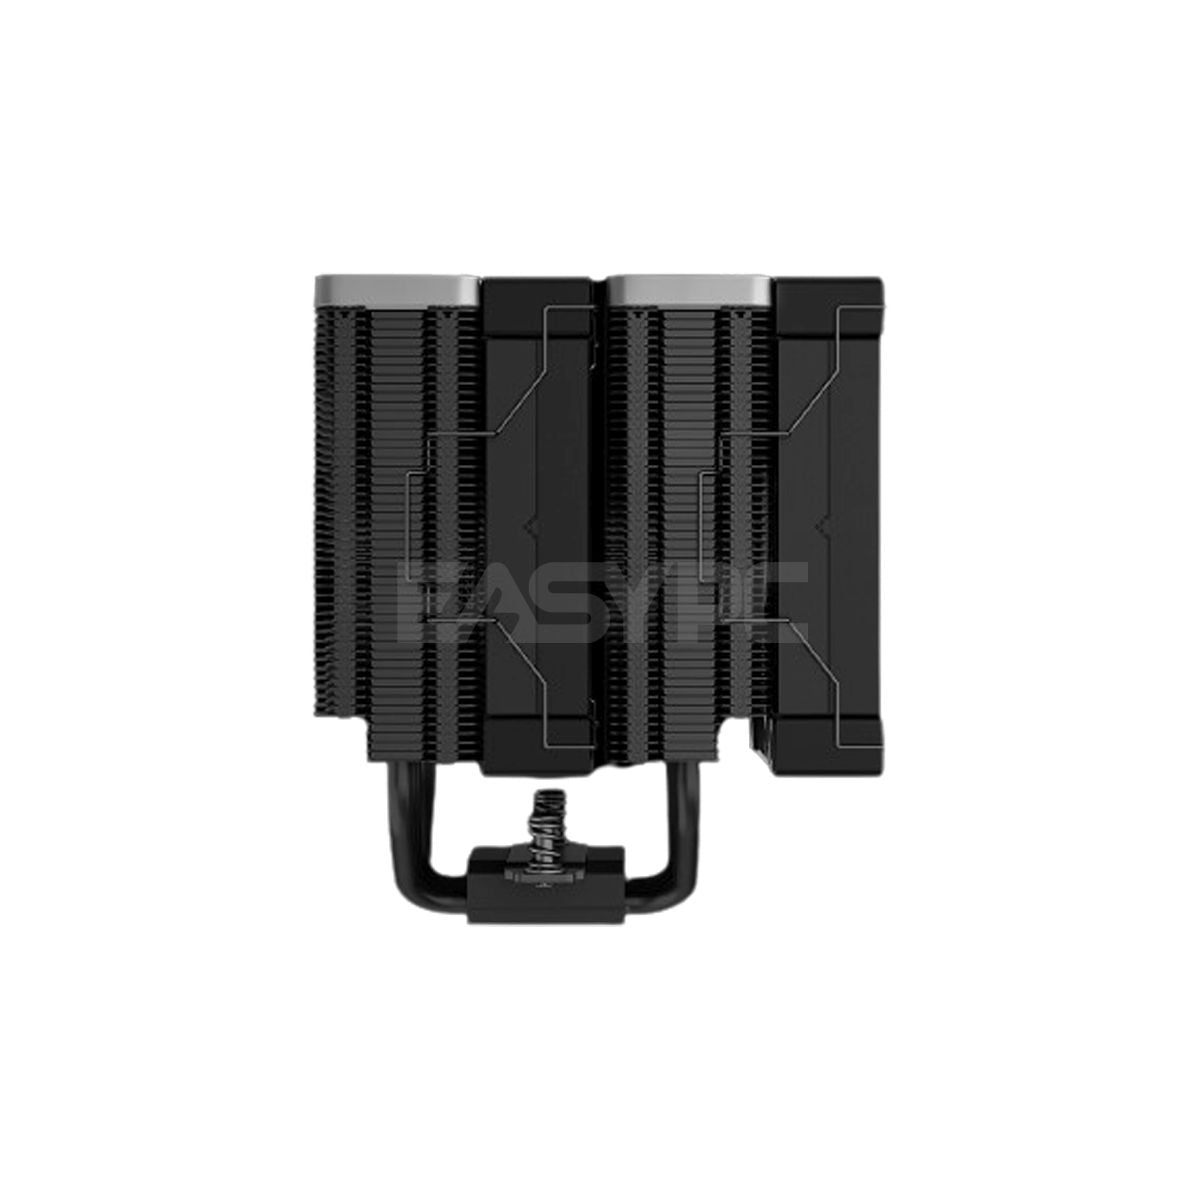 Deepcool AK620 Digital dual tower CPU Air Cooler – EasyPC